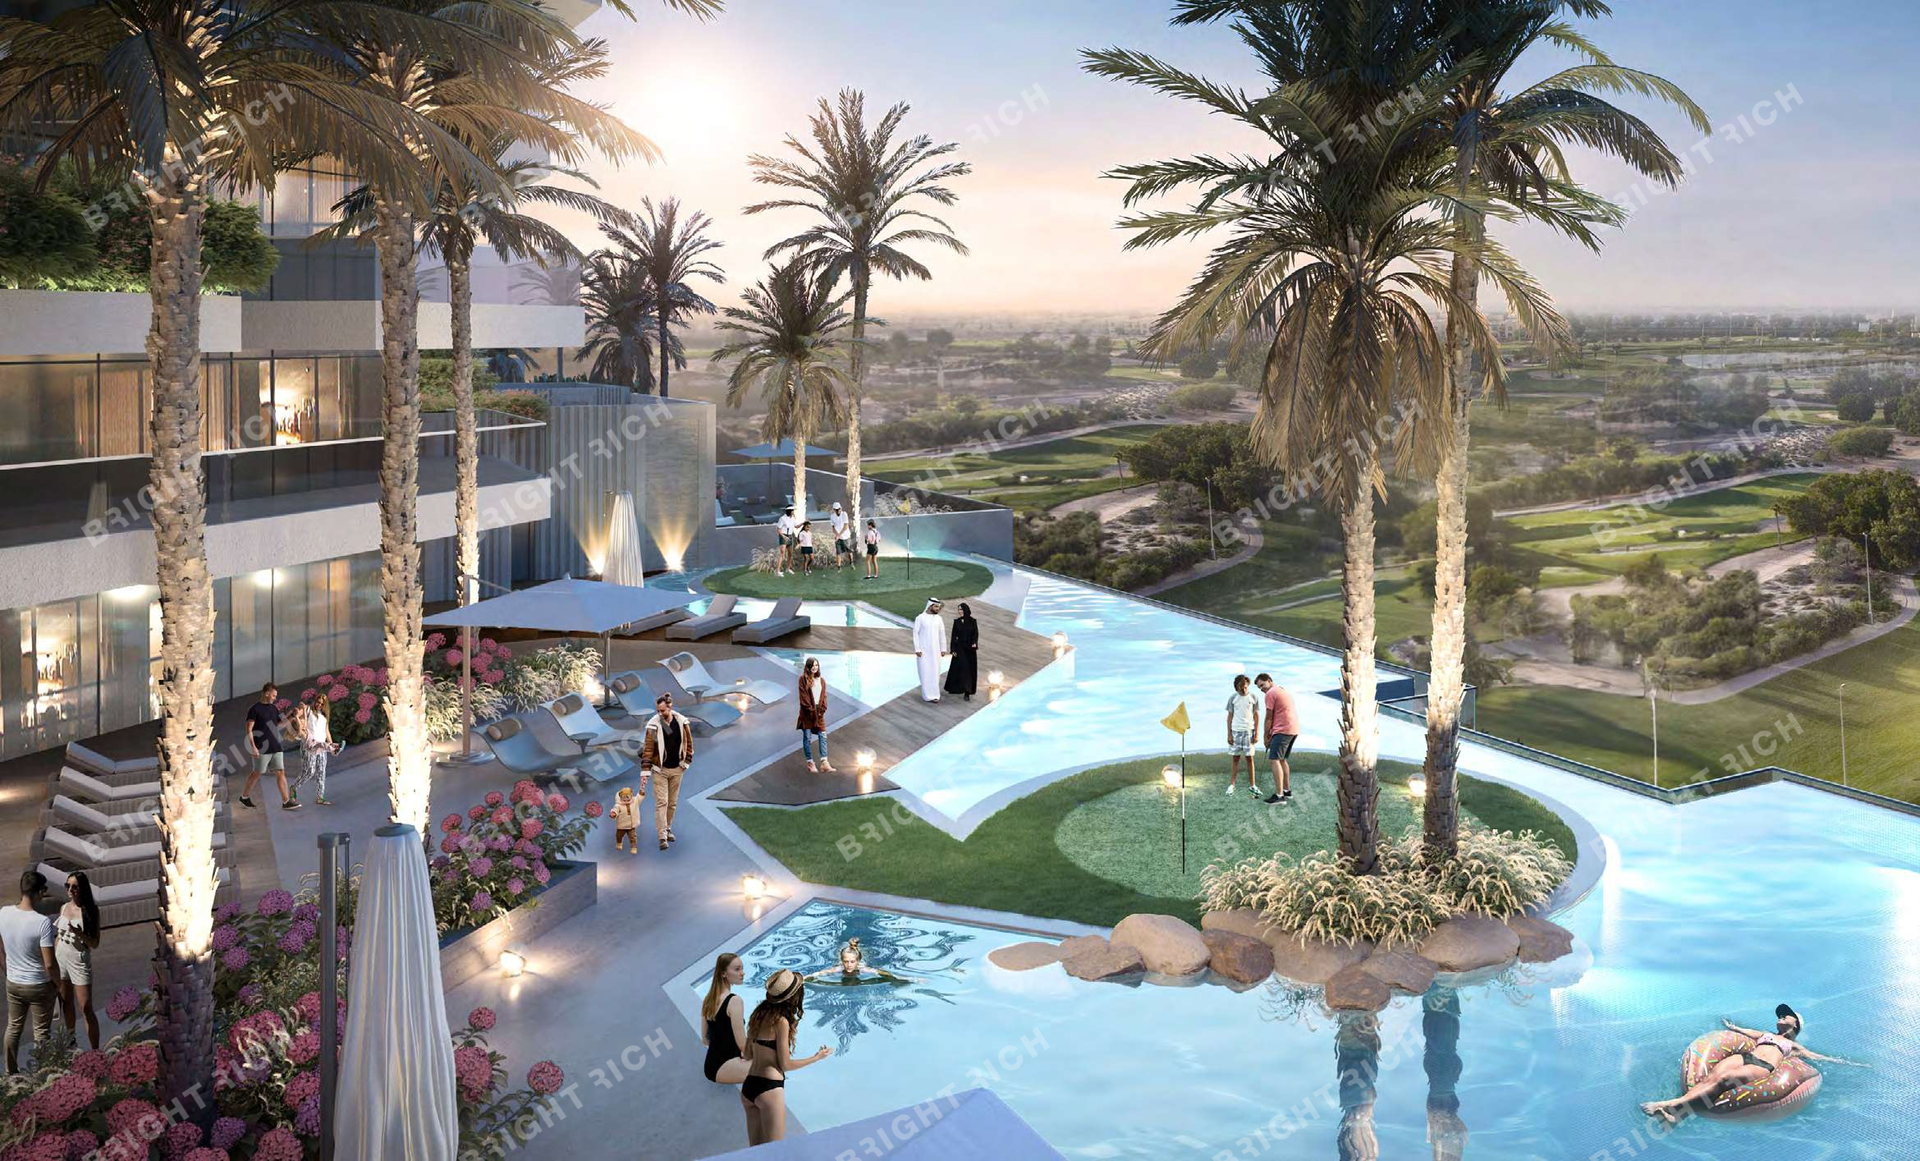 Golf Greens Building 1B, apart complex in Dubai - 6